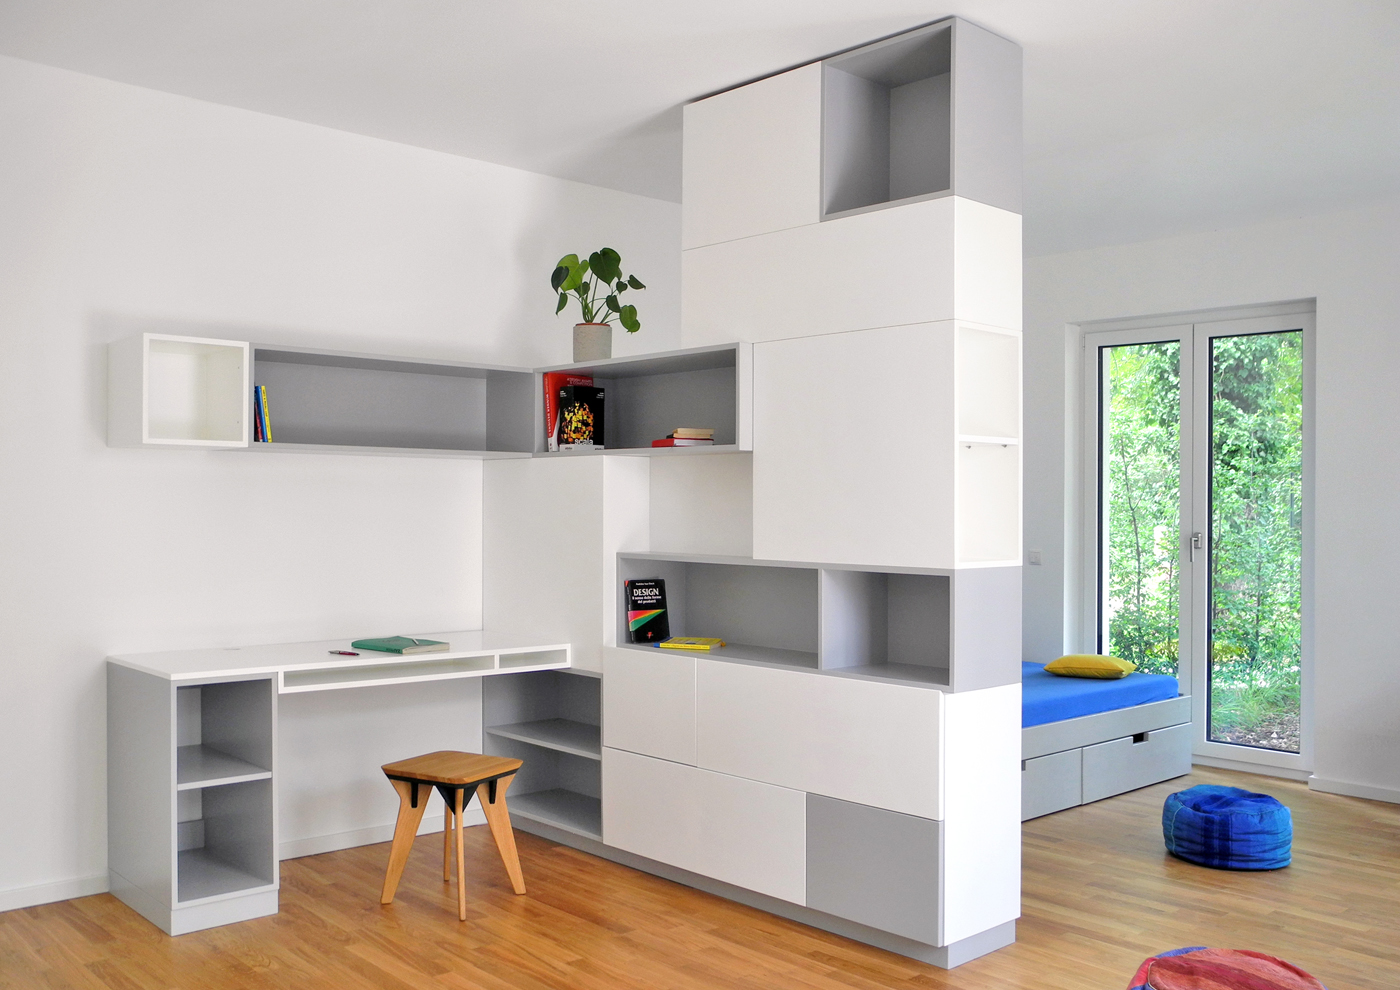 Tetris - Room divider - view1 - Davide Mezzasalma - Furniture design - Berlin